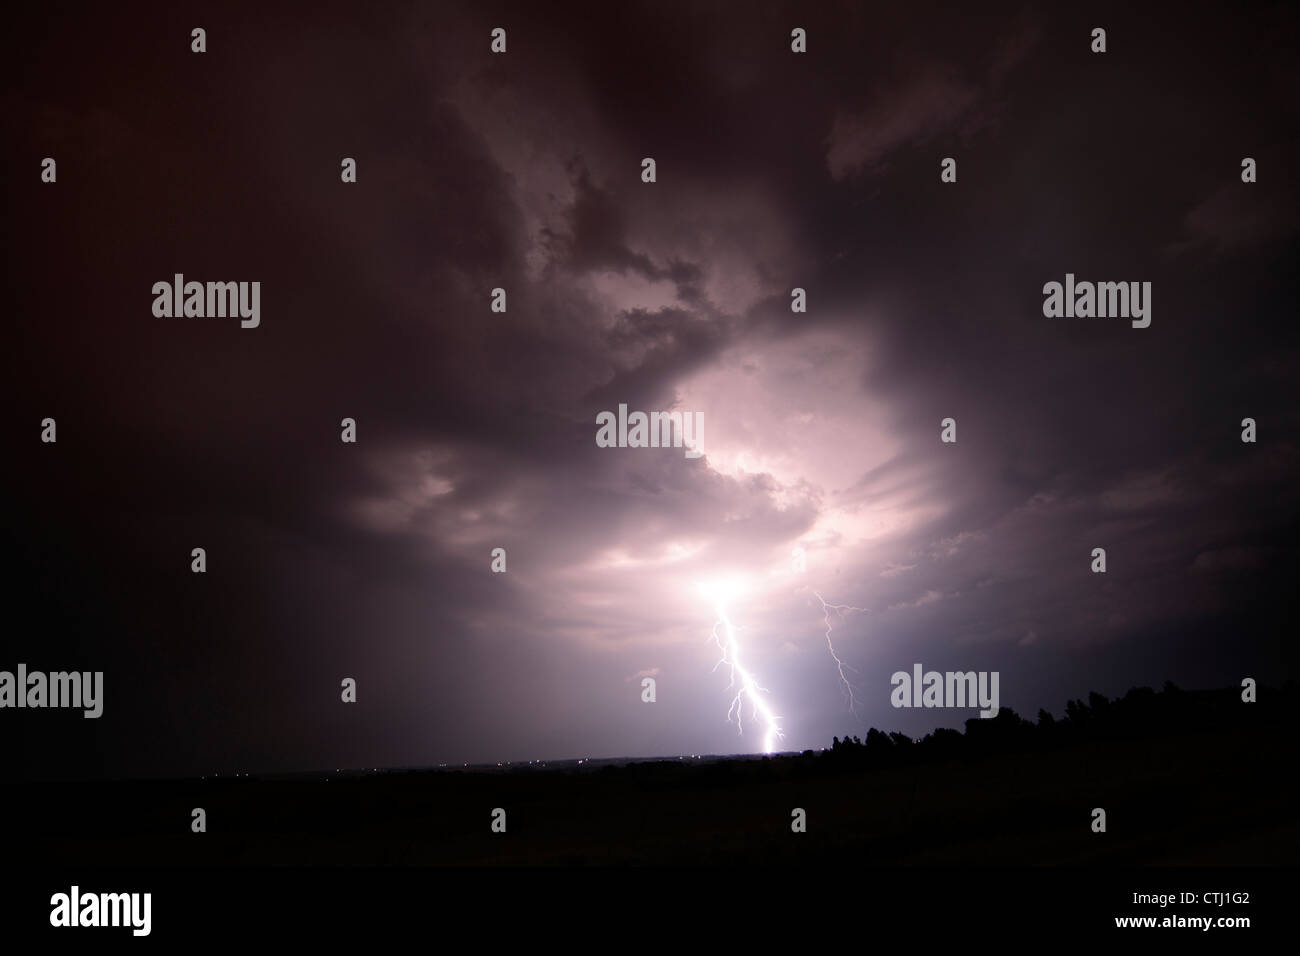 Lightning strikes during a night thunderstorm. Stock Photo